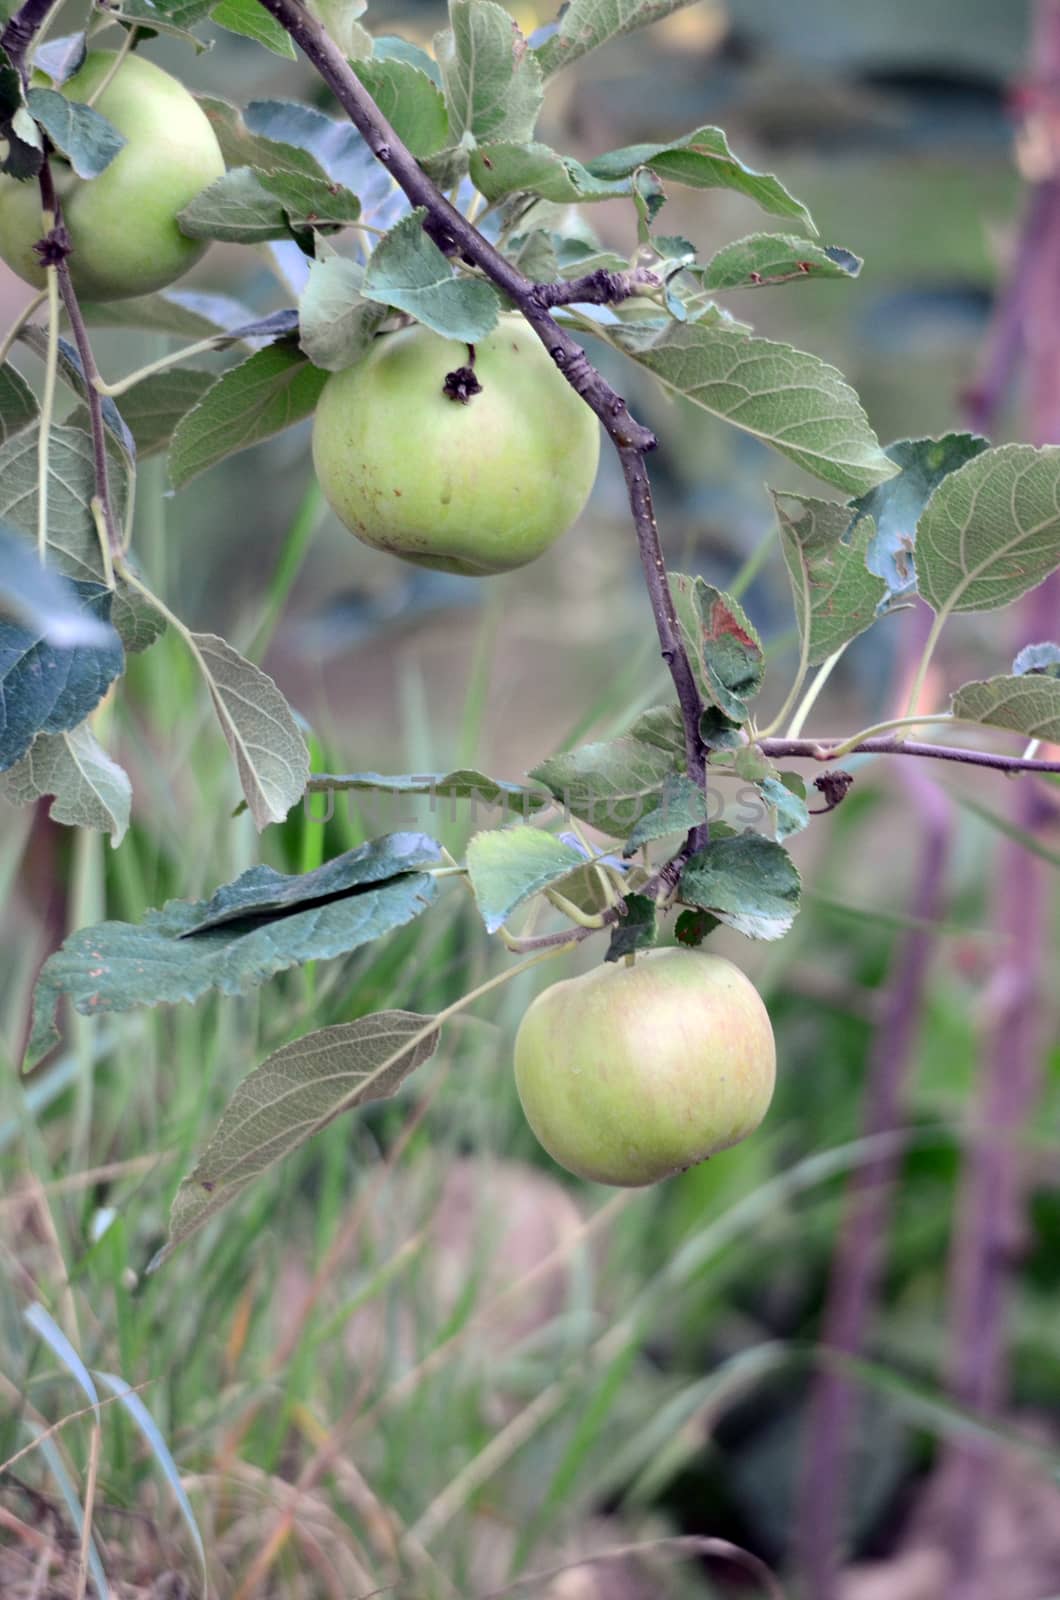 Unripe apples on apple tree branch